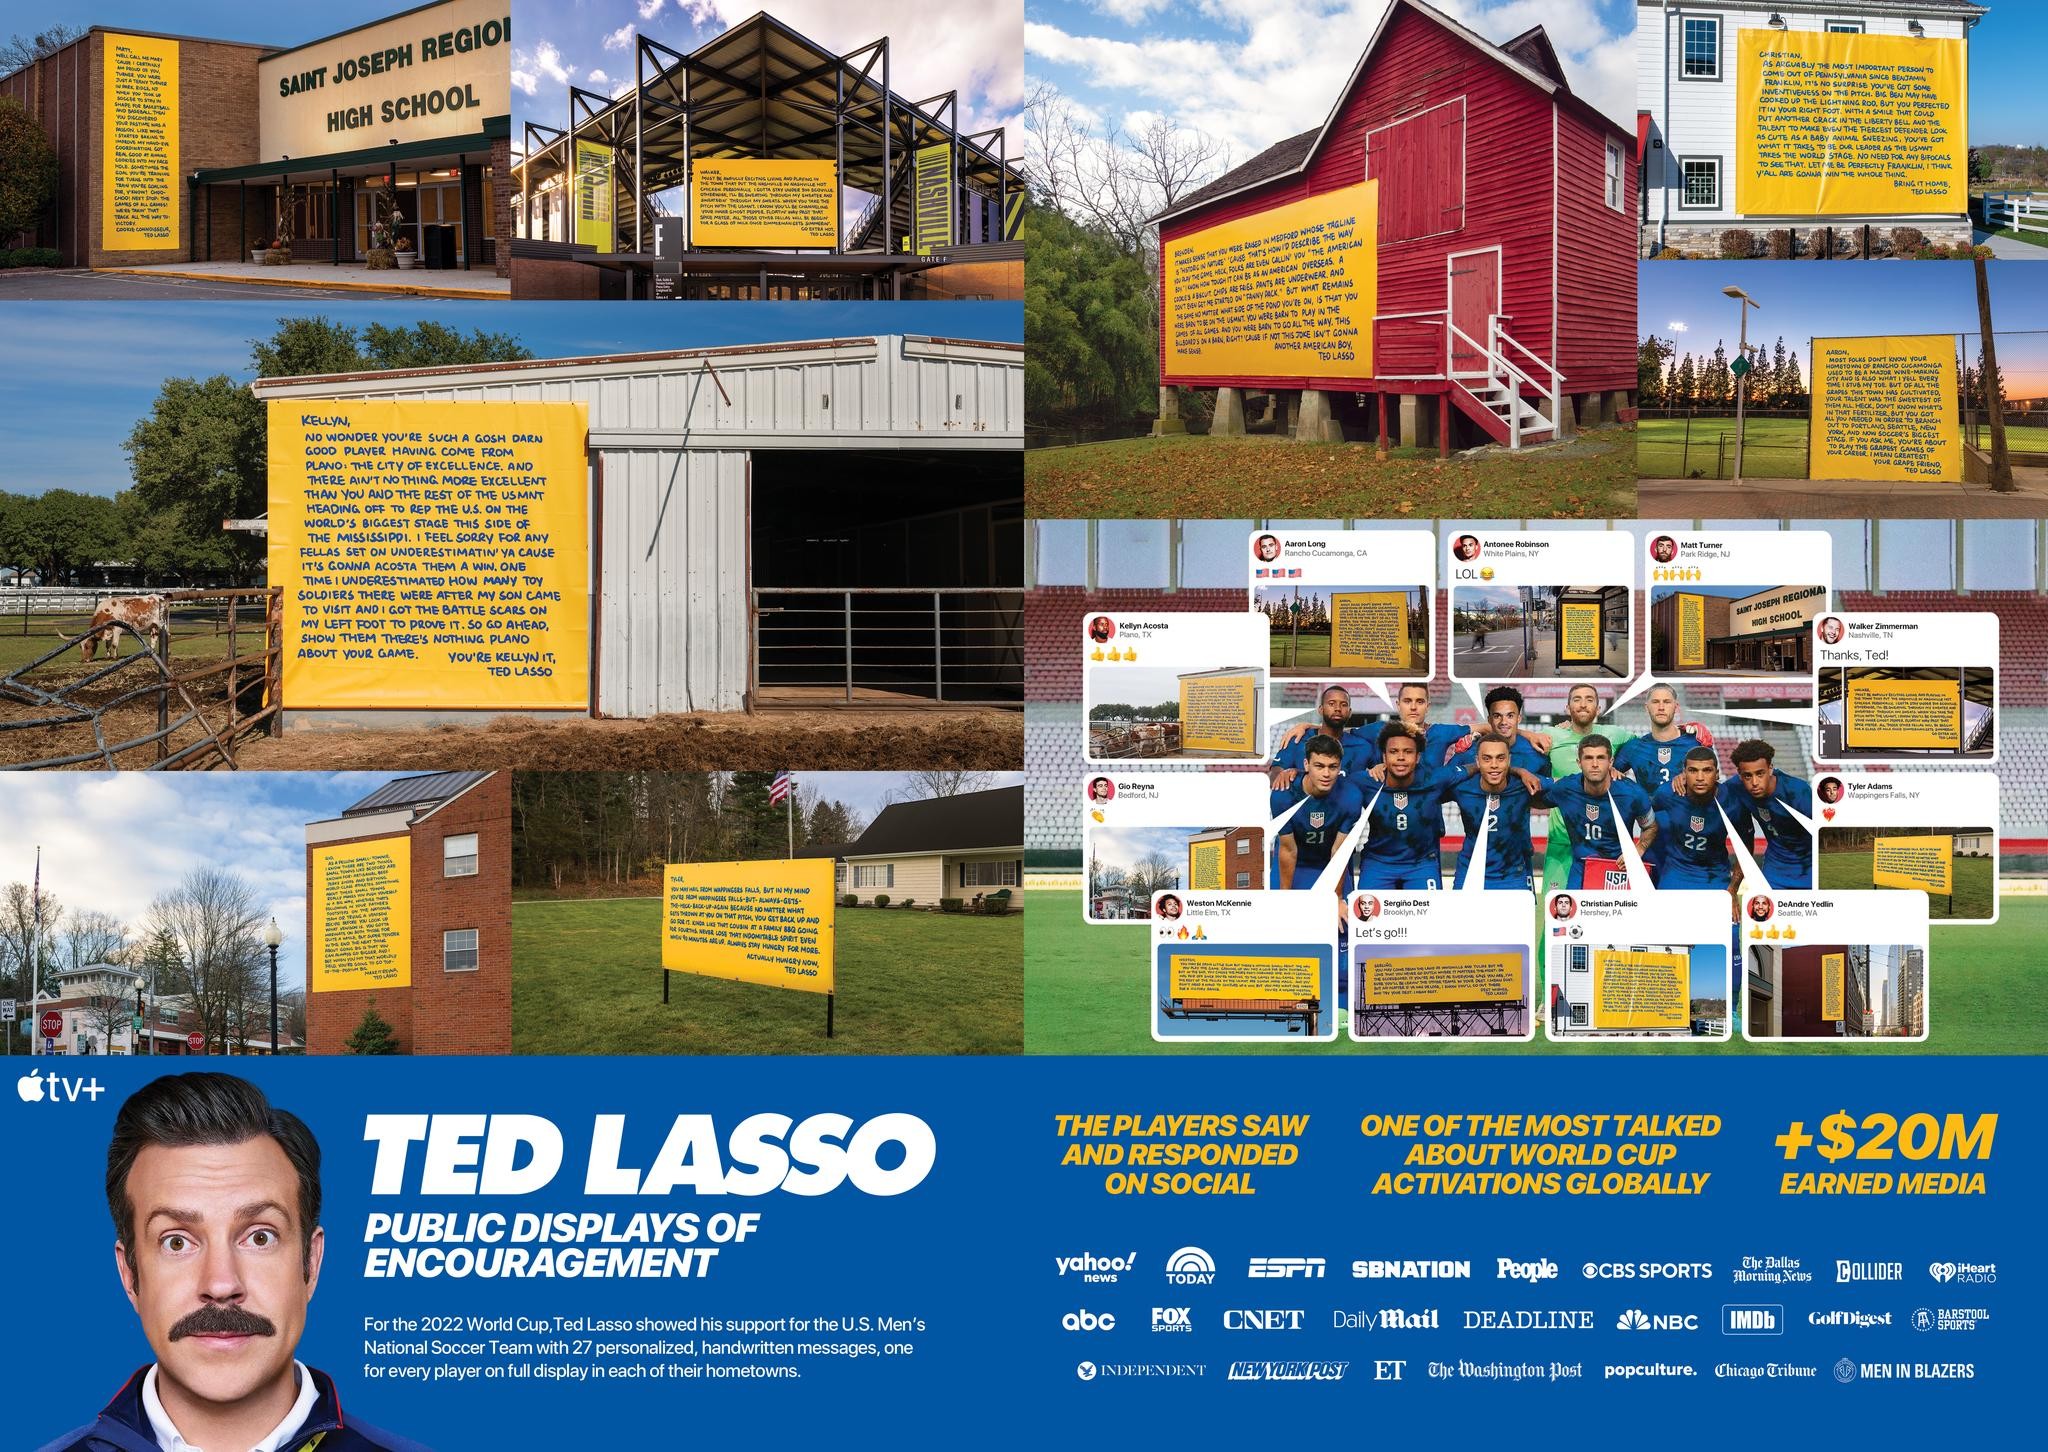 Ted Lasso Public Displays of Encouragement